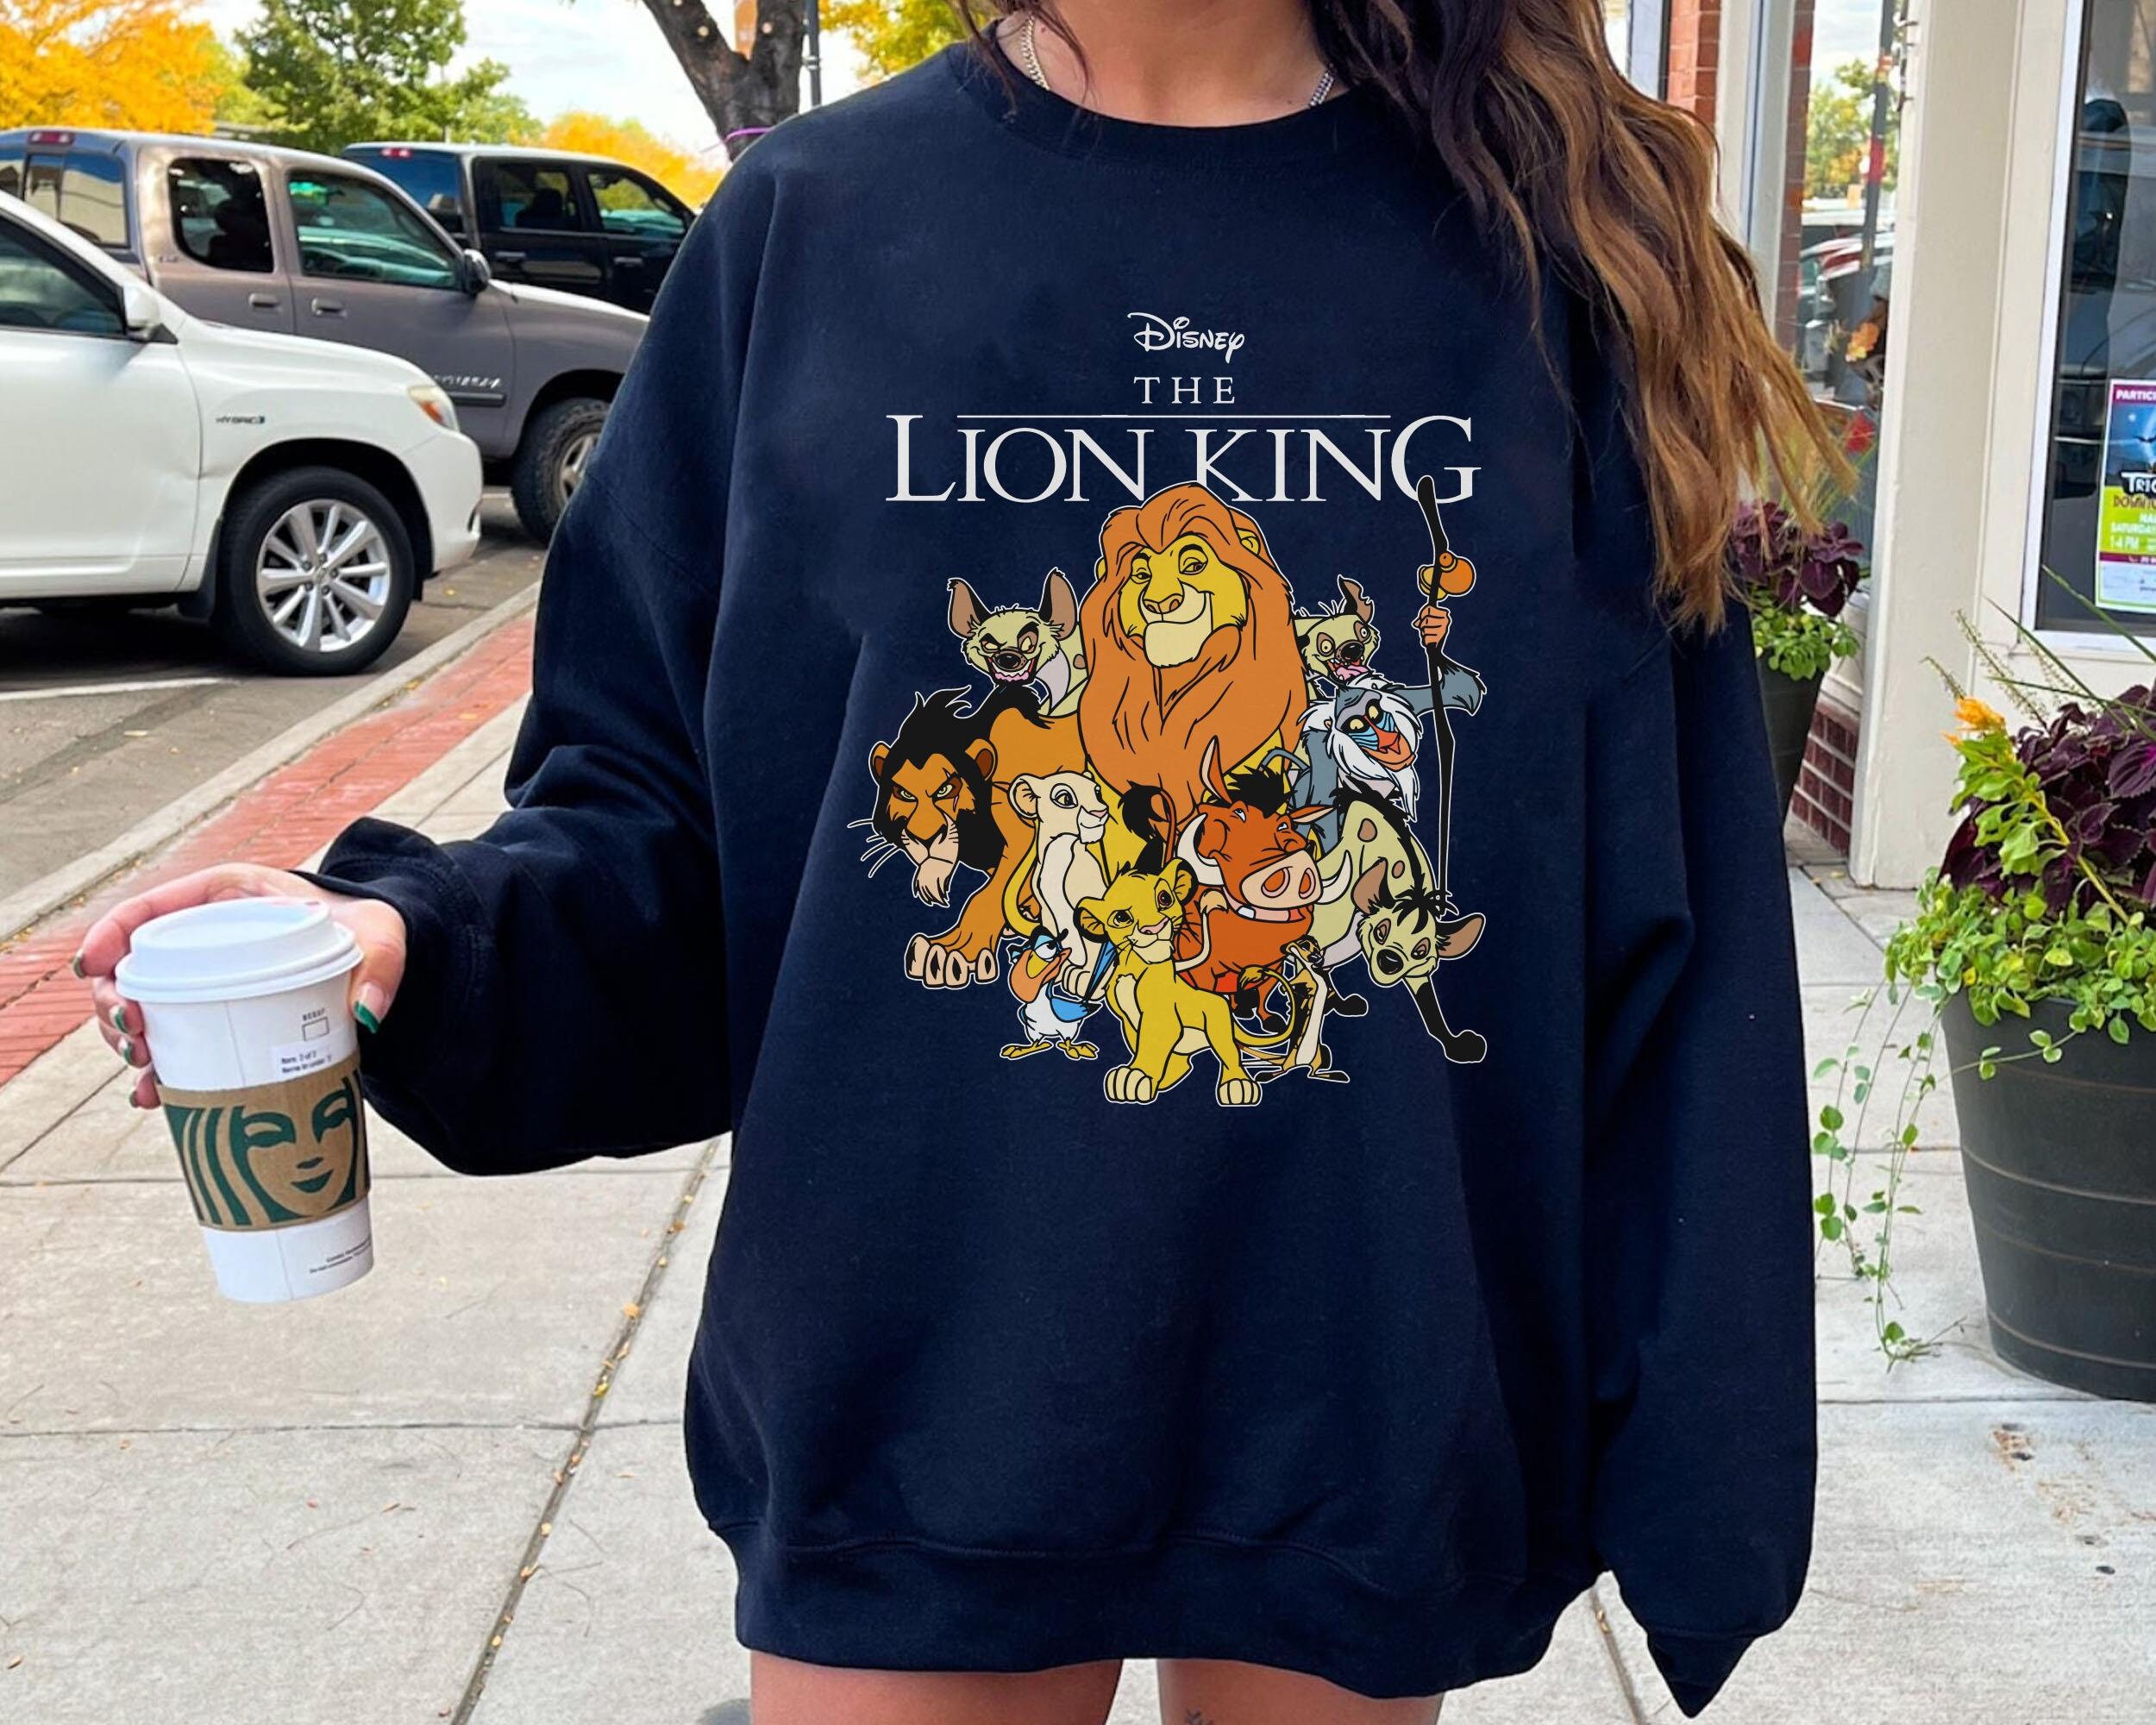 2 Sided Hakuna Matata It Means No Worries Comfort Colors T-shirt, Retro Groovy The Lion King Characters Shirt, Disney Magic Kingdom Trip